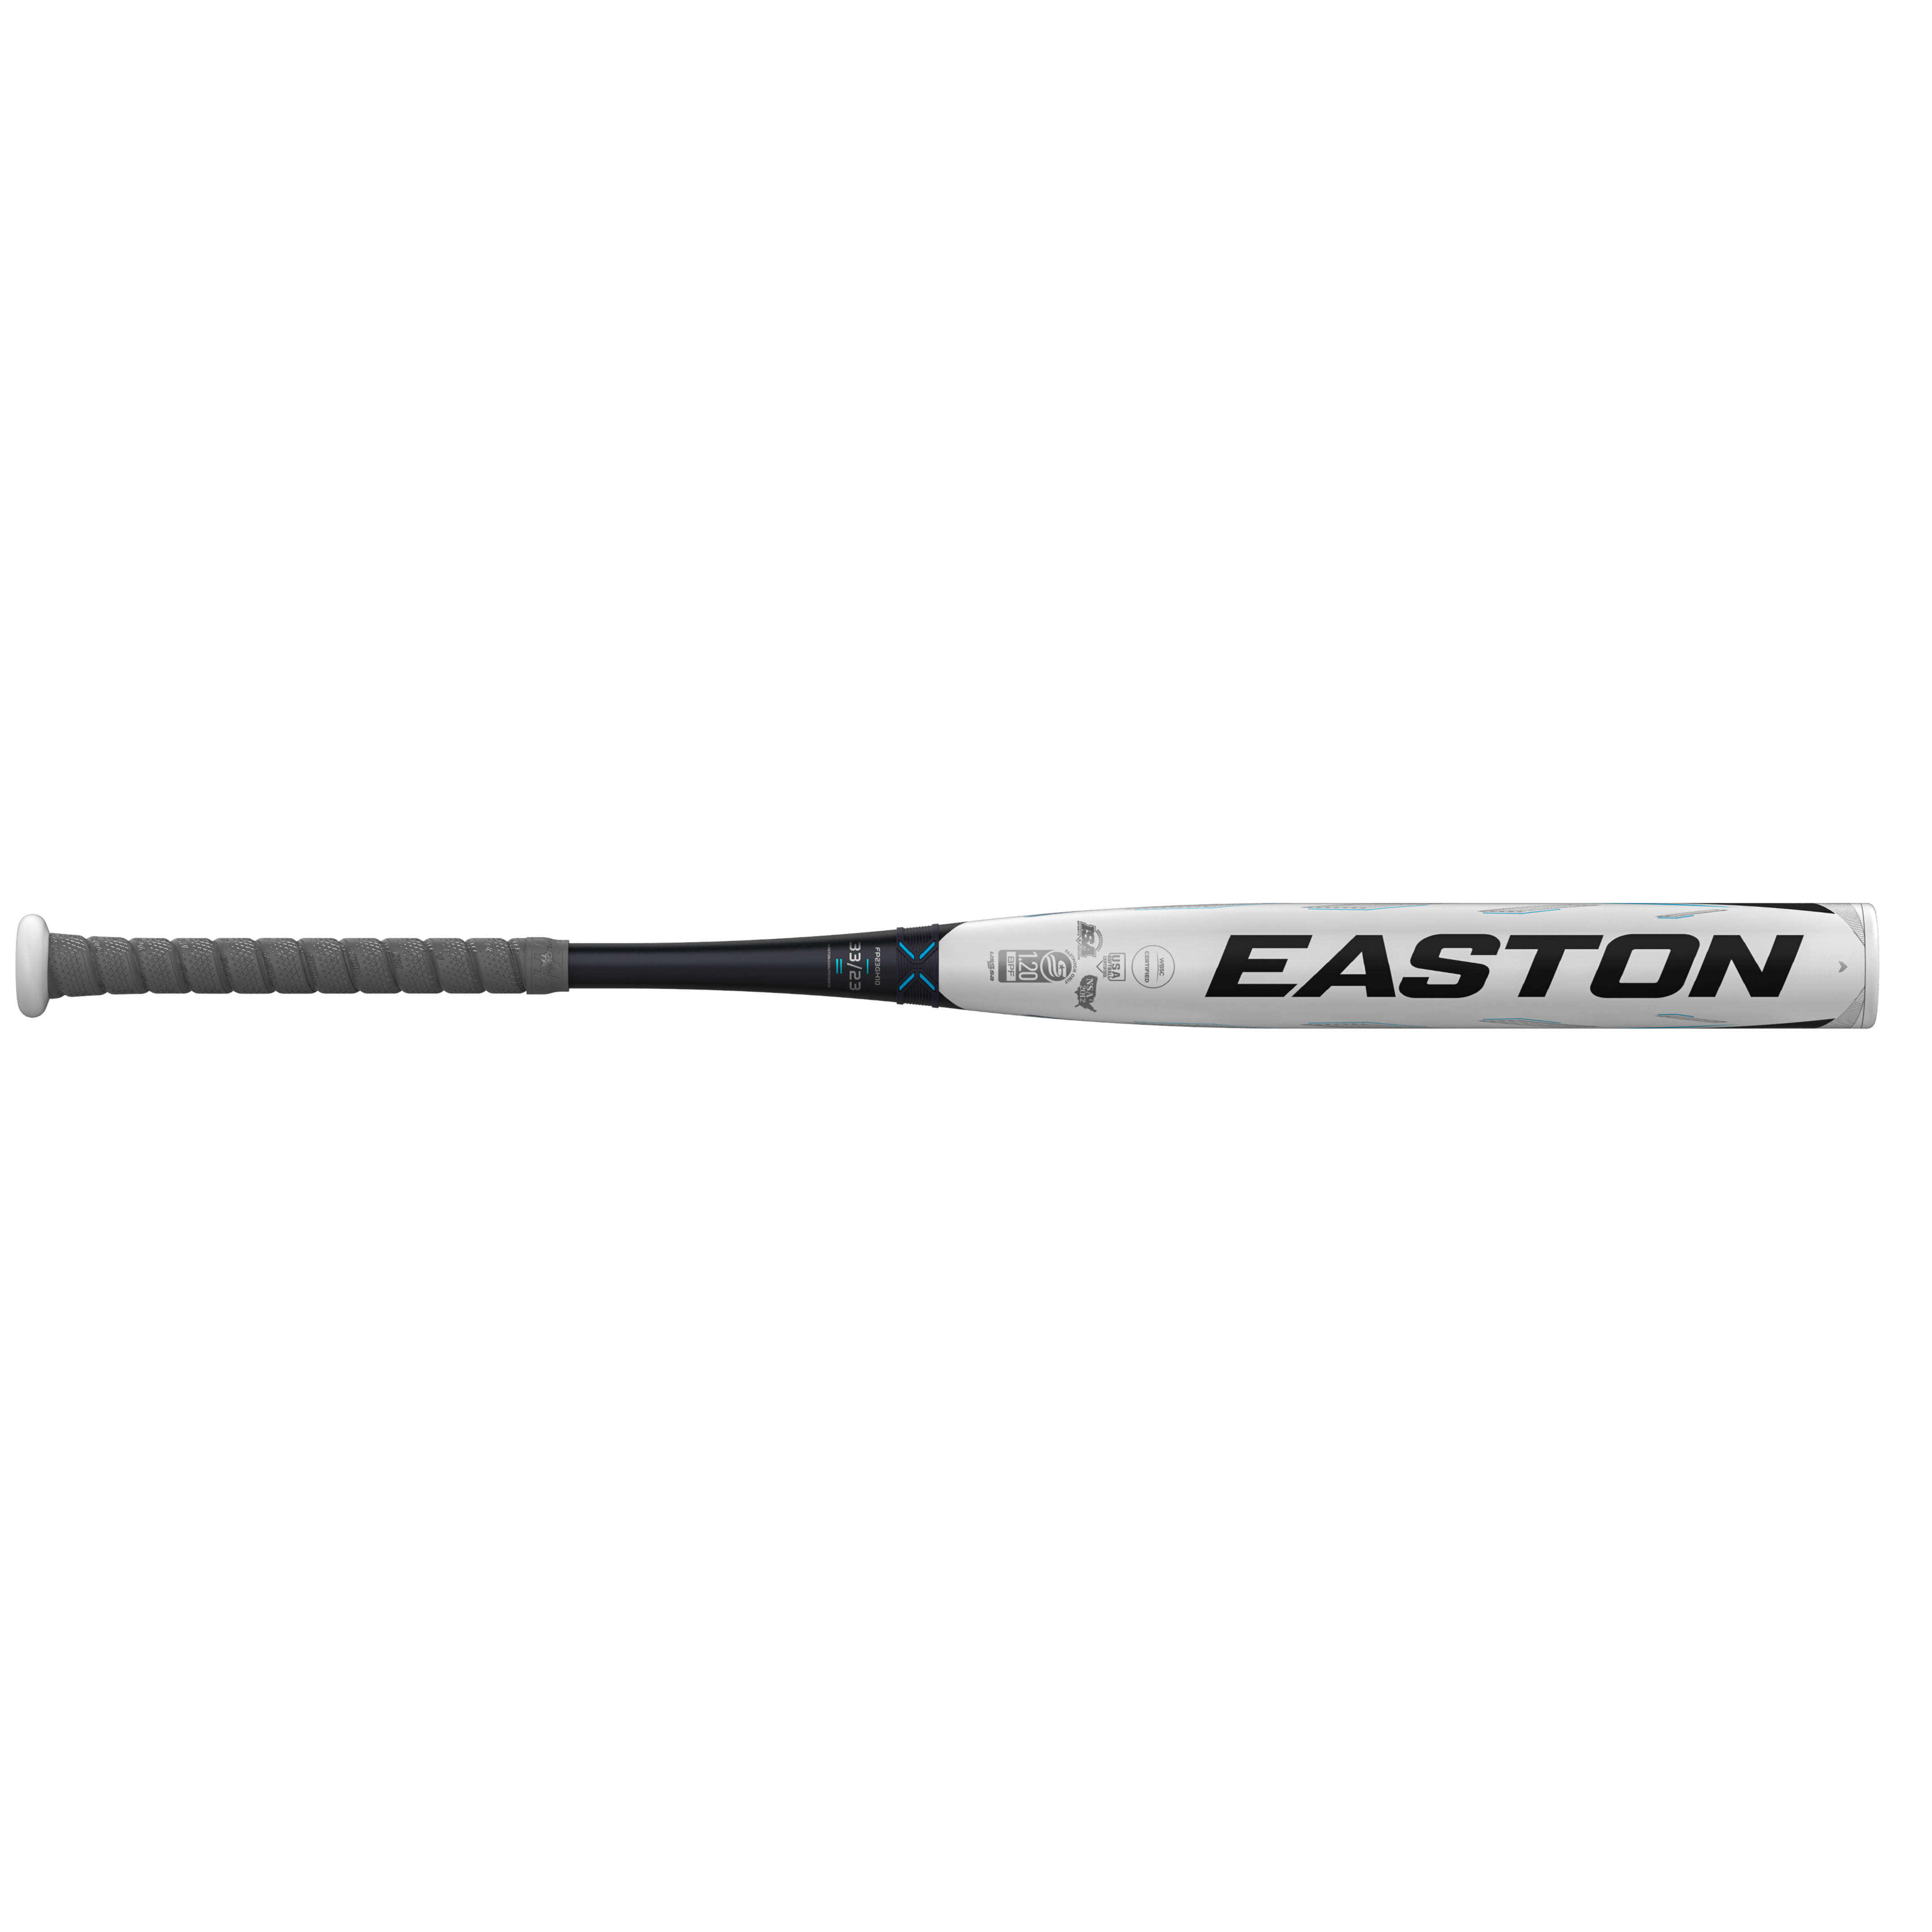 Easton Ghost Double Barrel Fastpitch Softball Bat